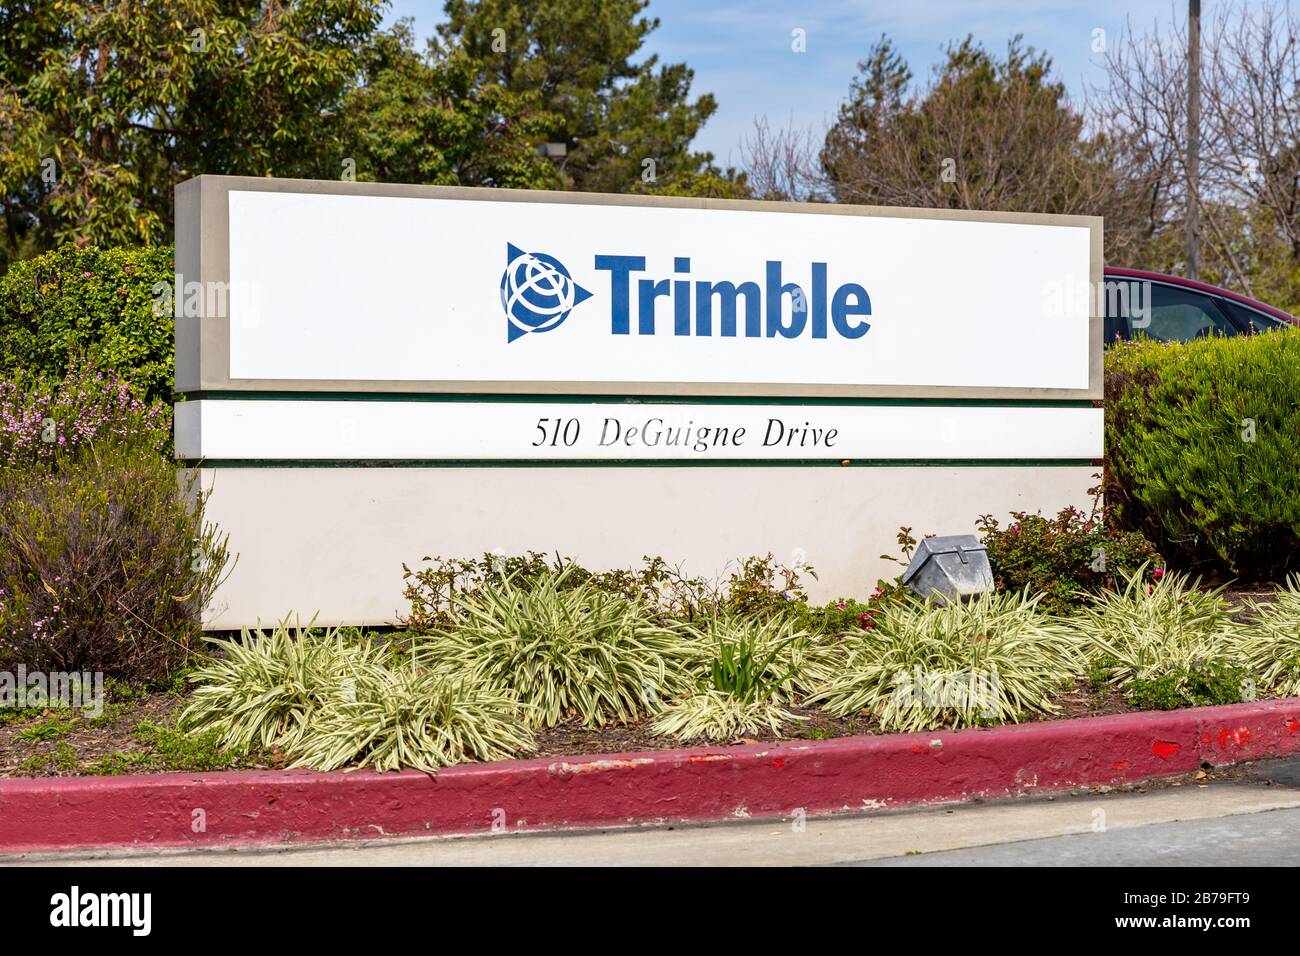 Trimble, sign, Deguigne Dr, Sunnyvale, California, USA Stock Photo